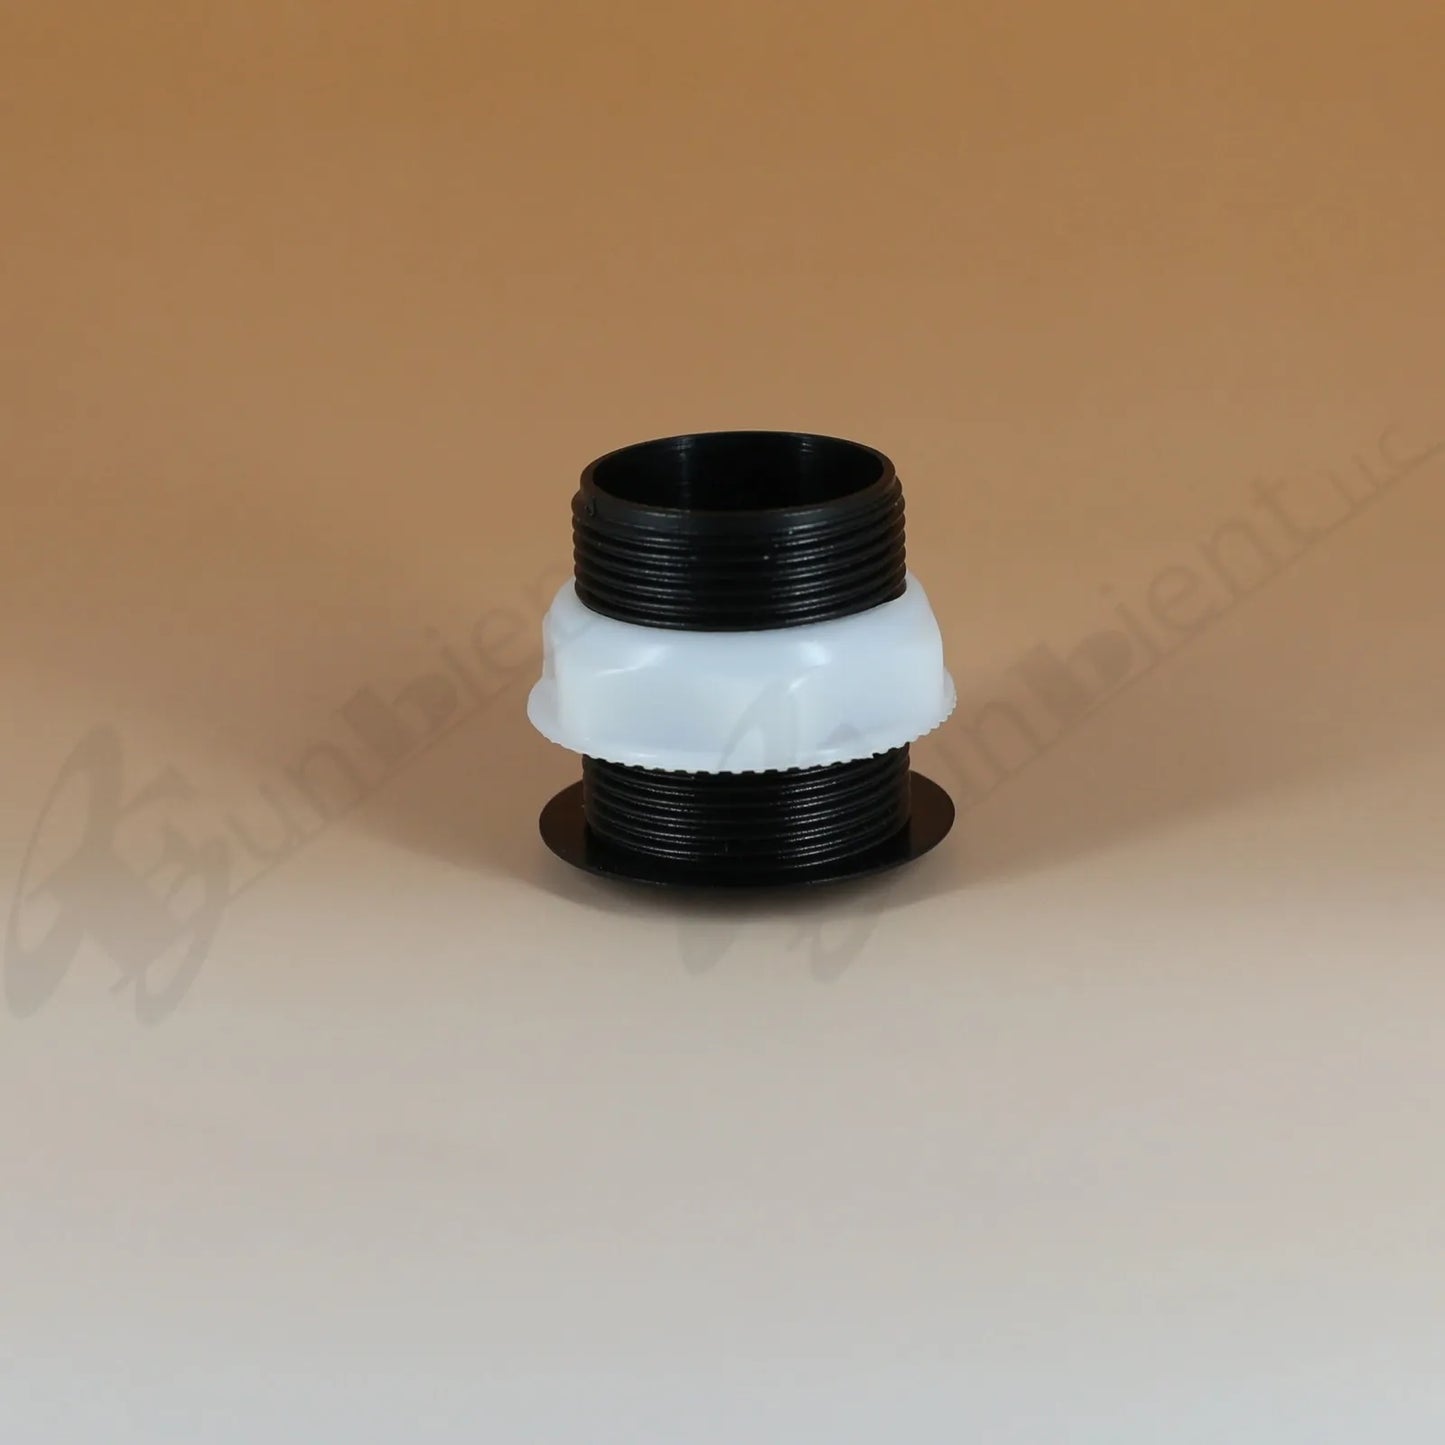 Sanwa Seimitsu Button Hole Cap Plug 30mm for Jamma Candy Cabinet OBSM screw type